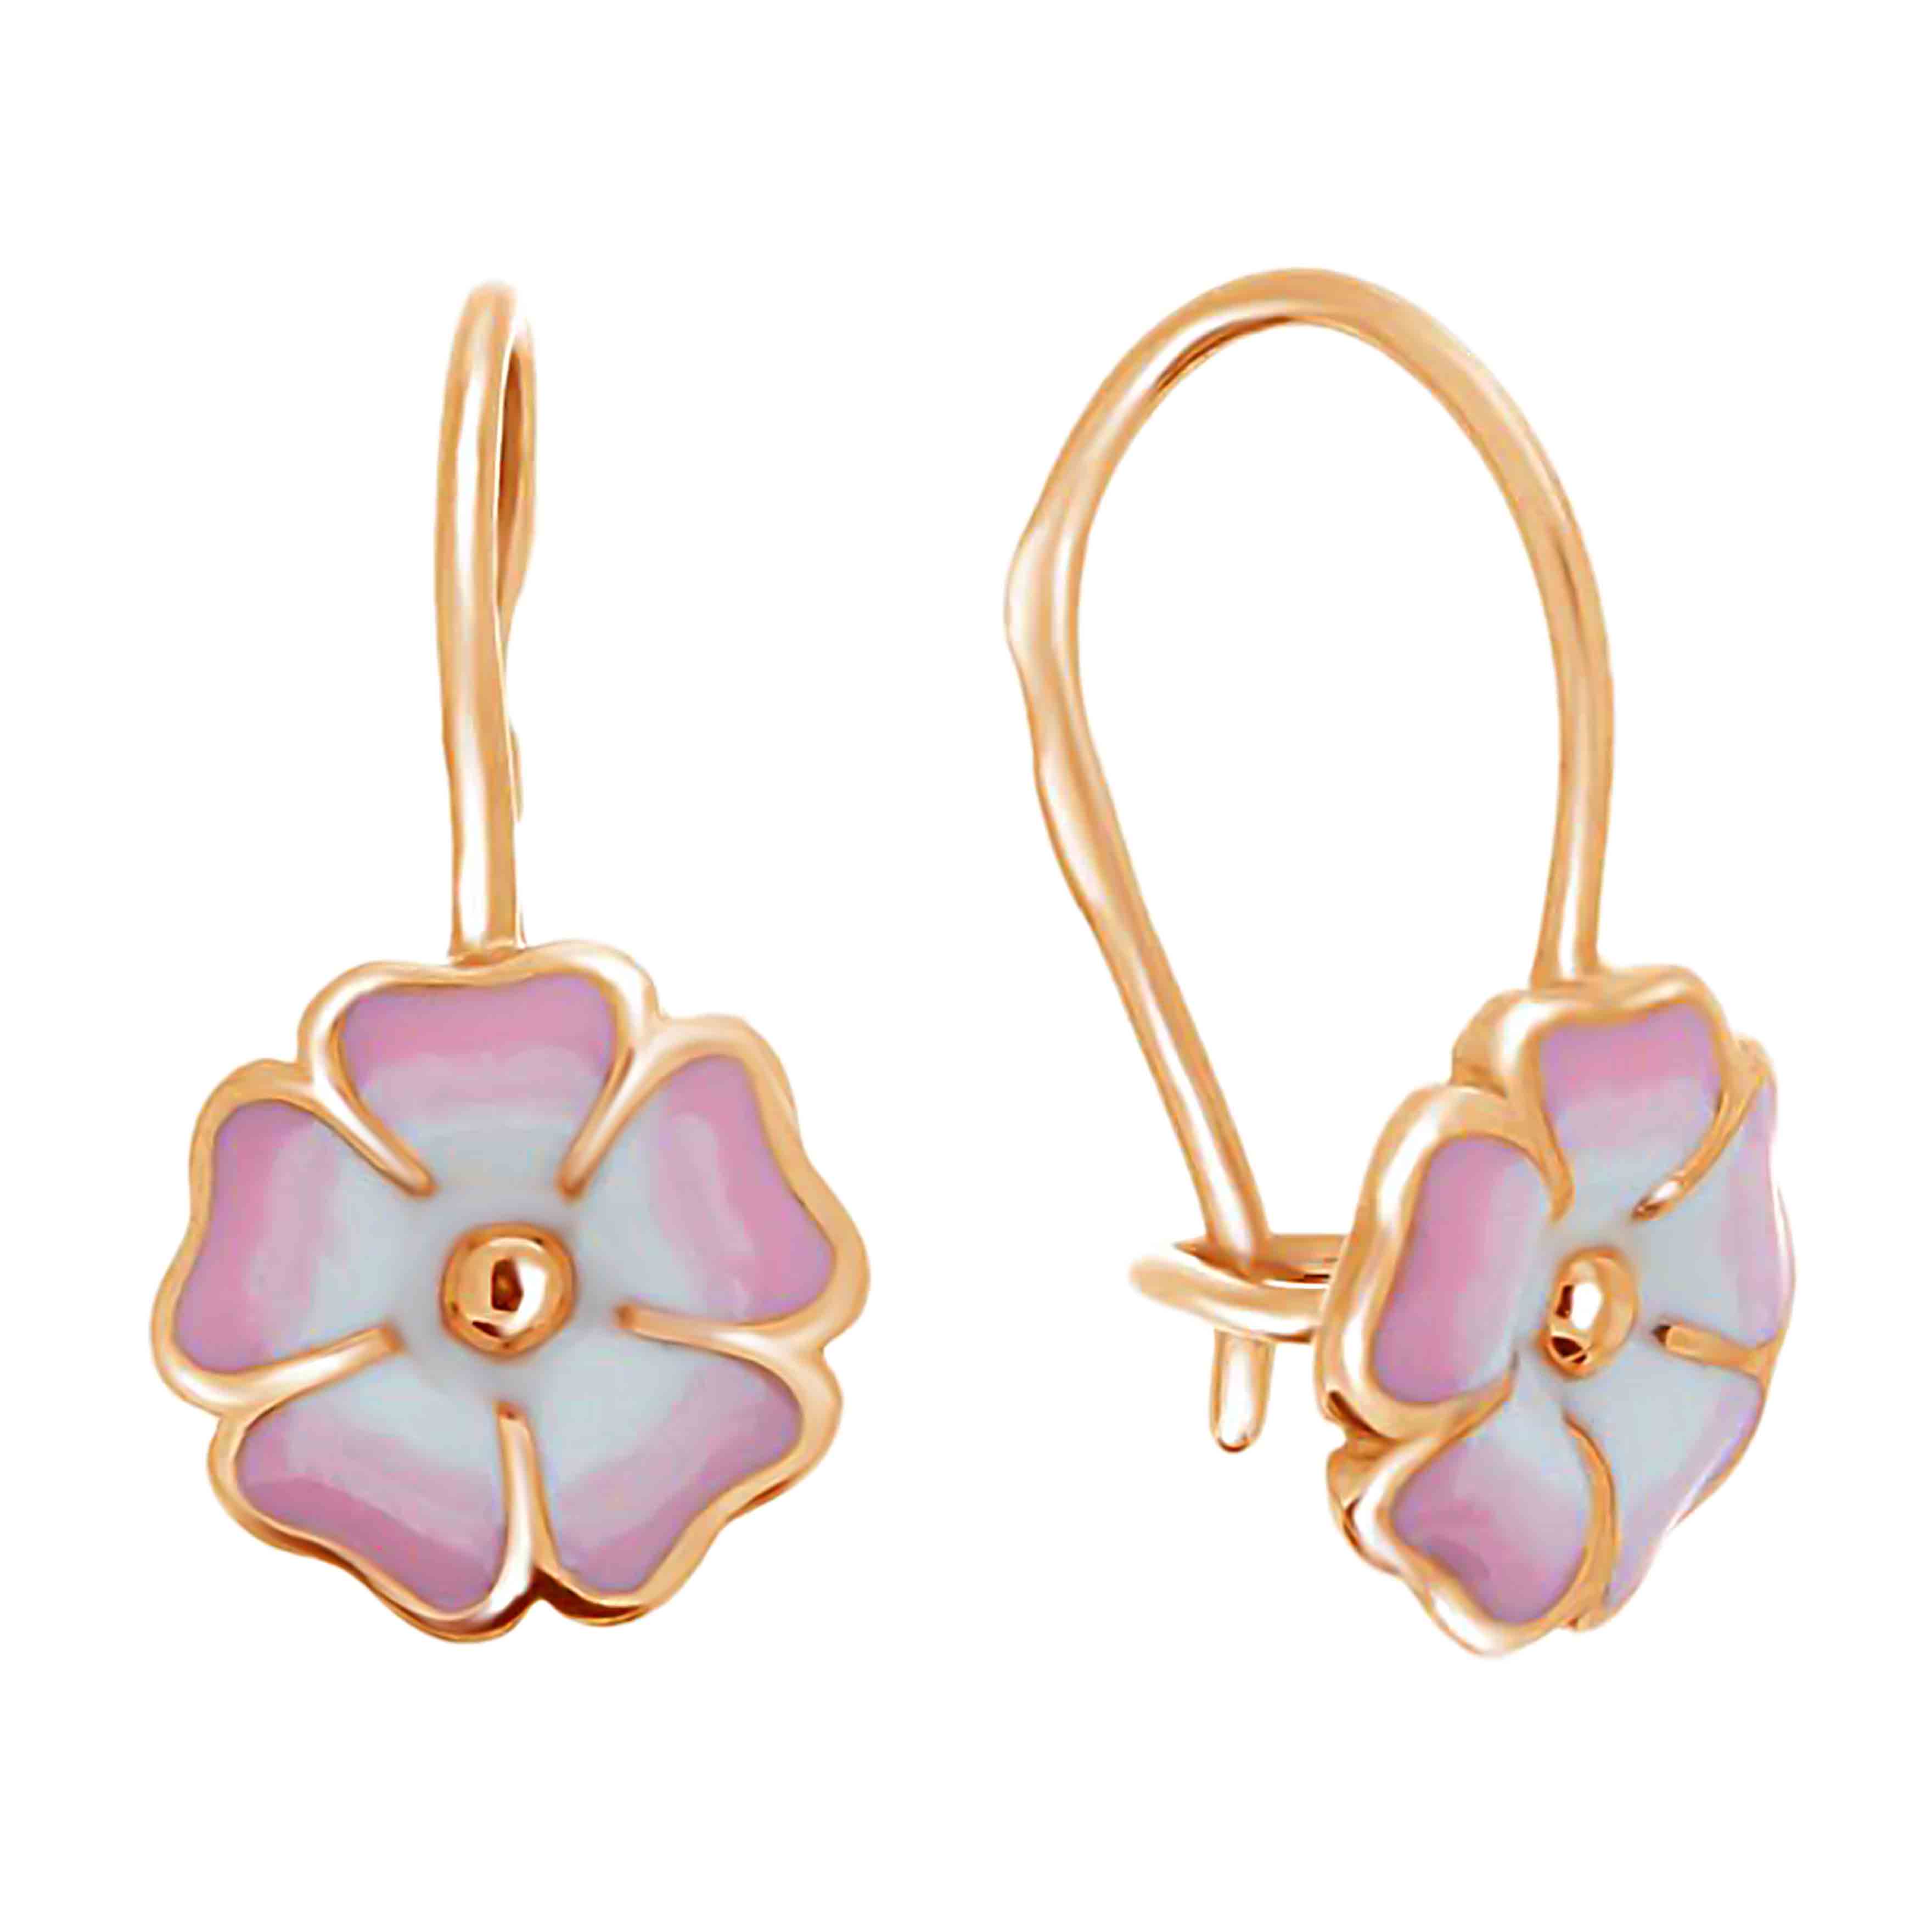 Buy quality Flowering Rose Gold Earrings For Wedding In 18kt in Pune